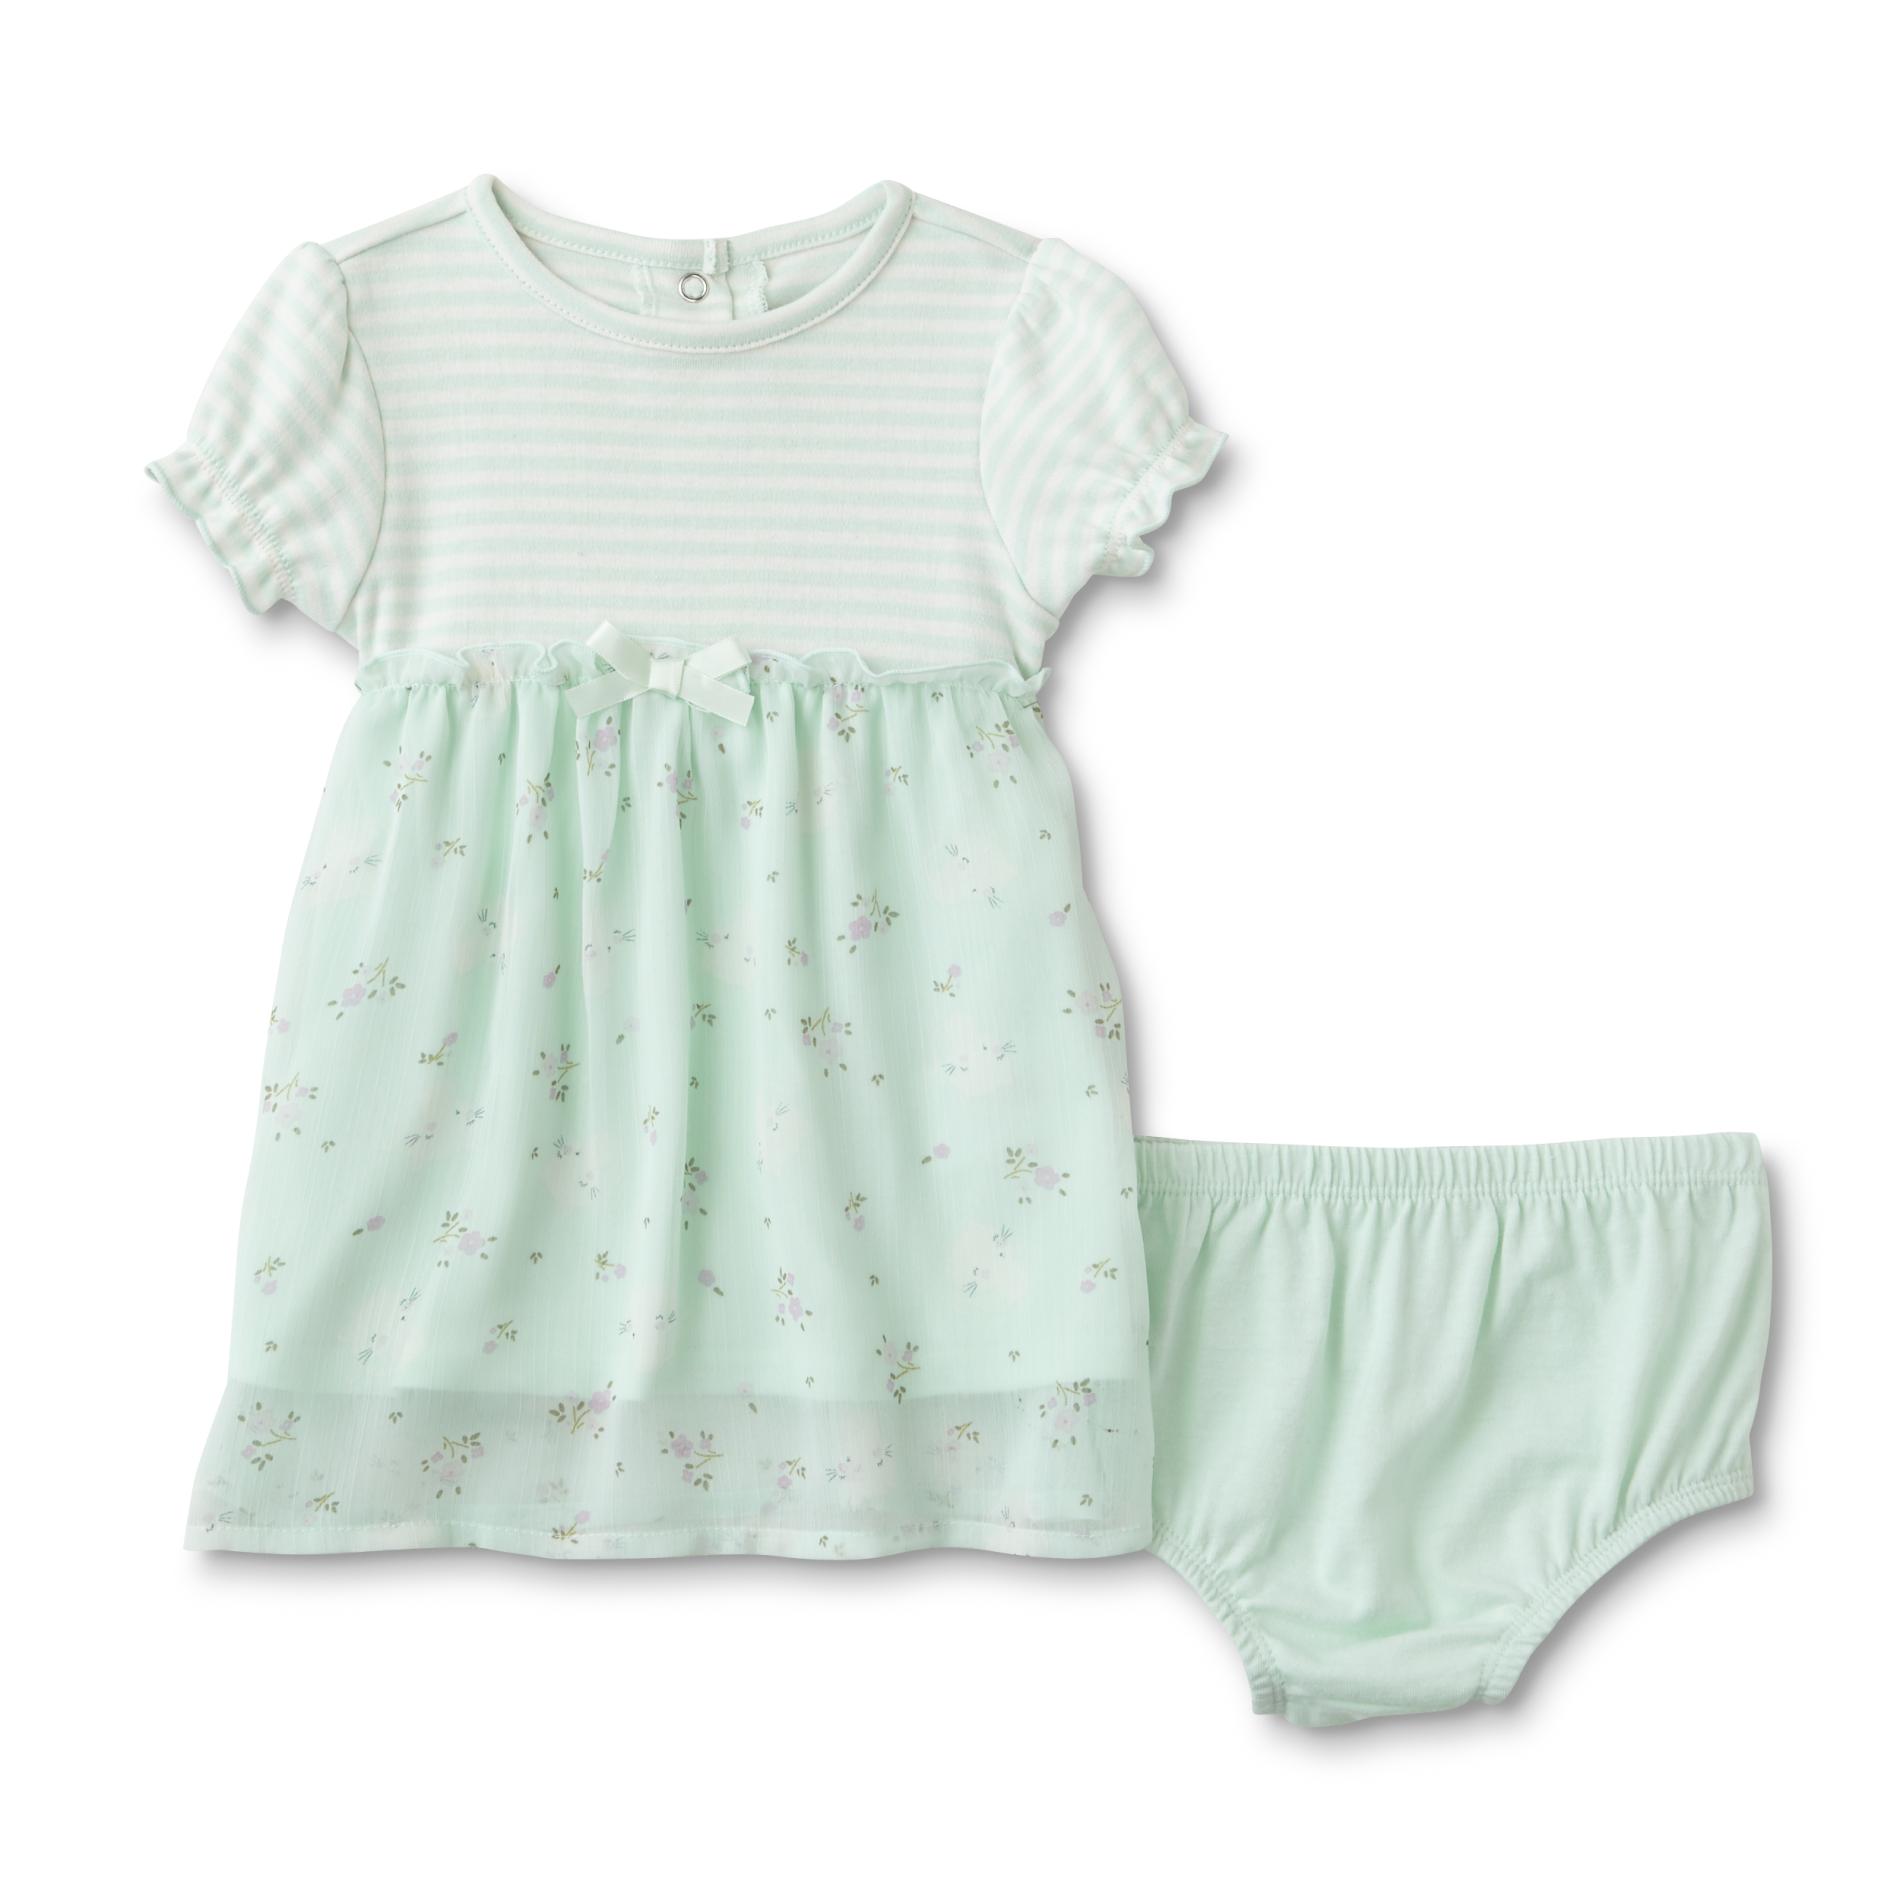 Little Wonders Infant Girls' Dress - Striped & Floral